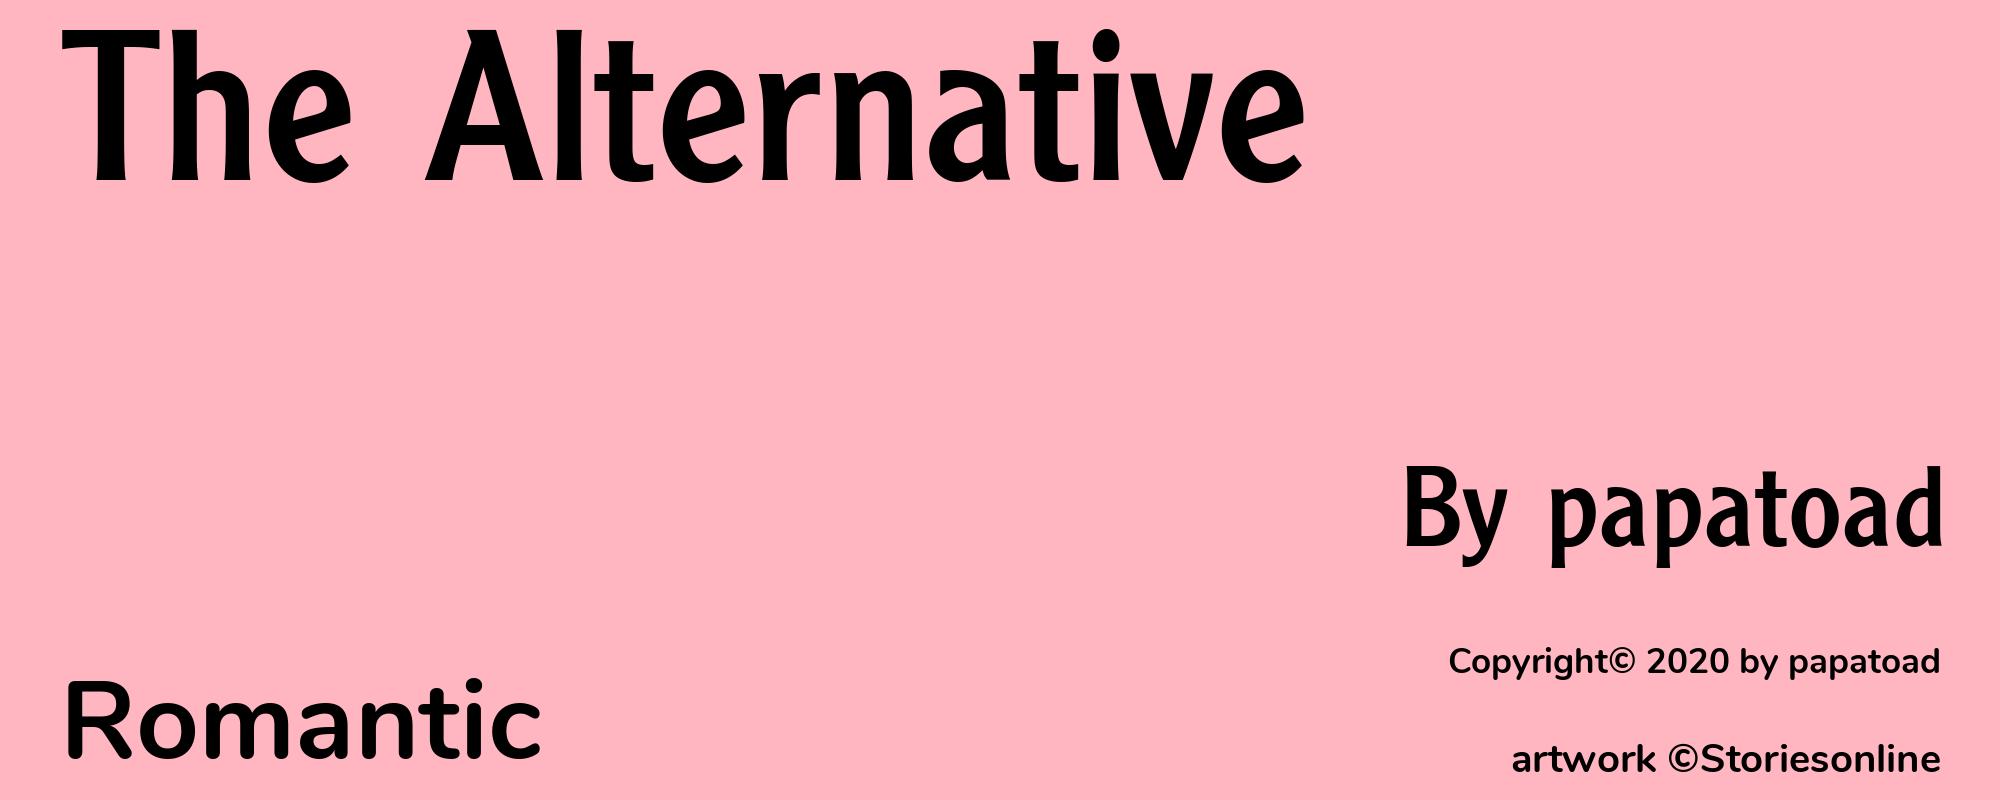 The Alternative - Cover